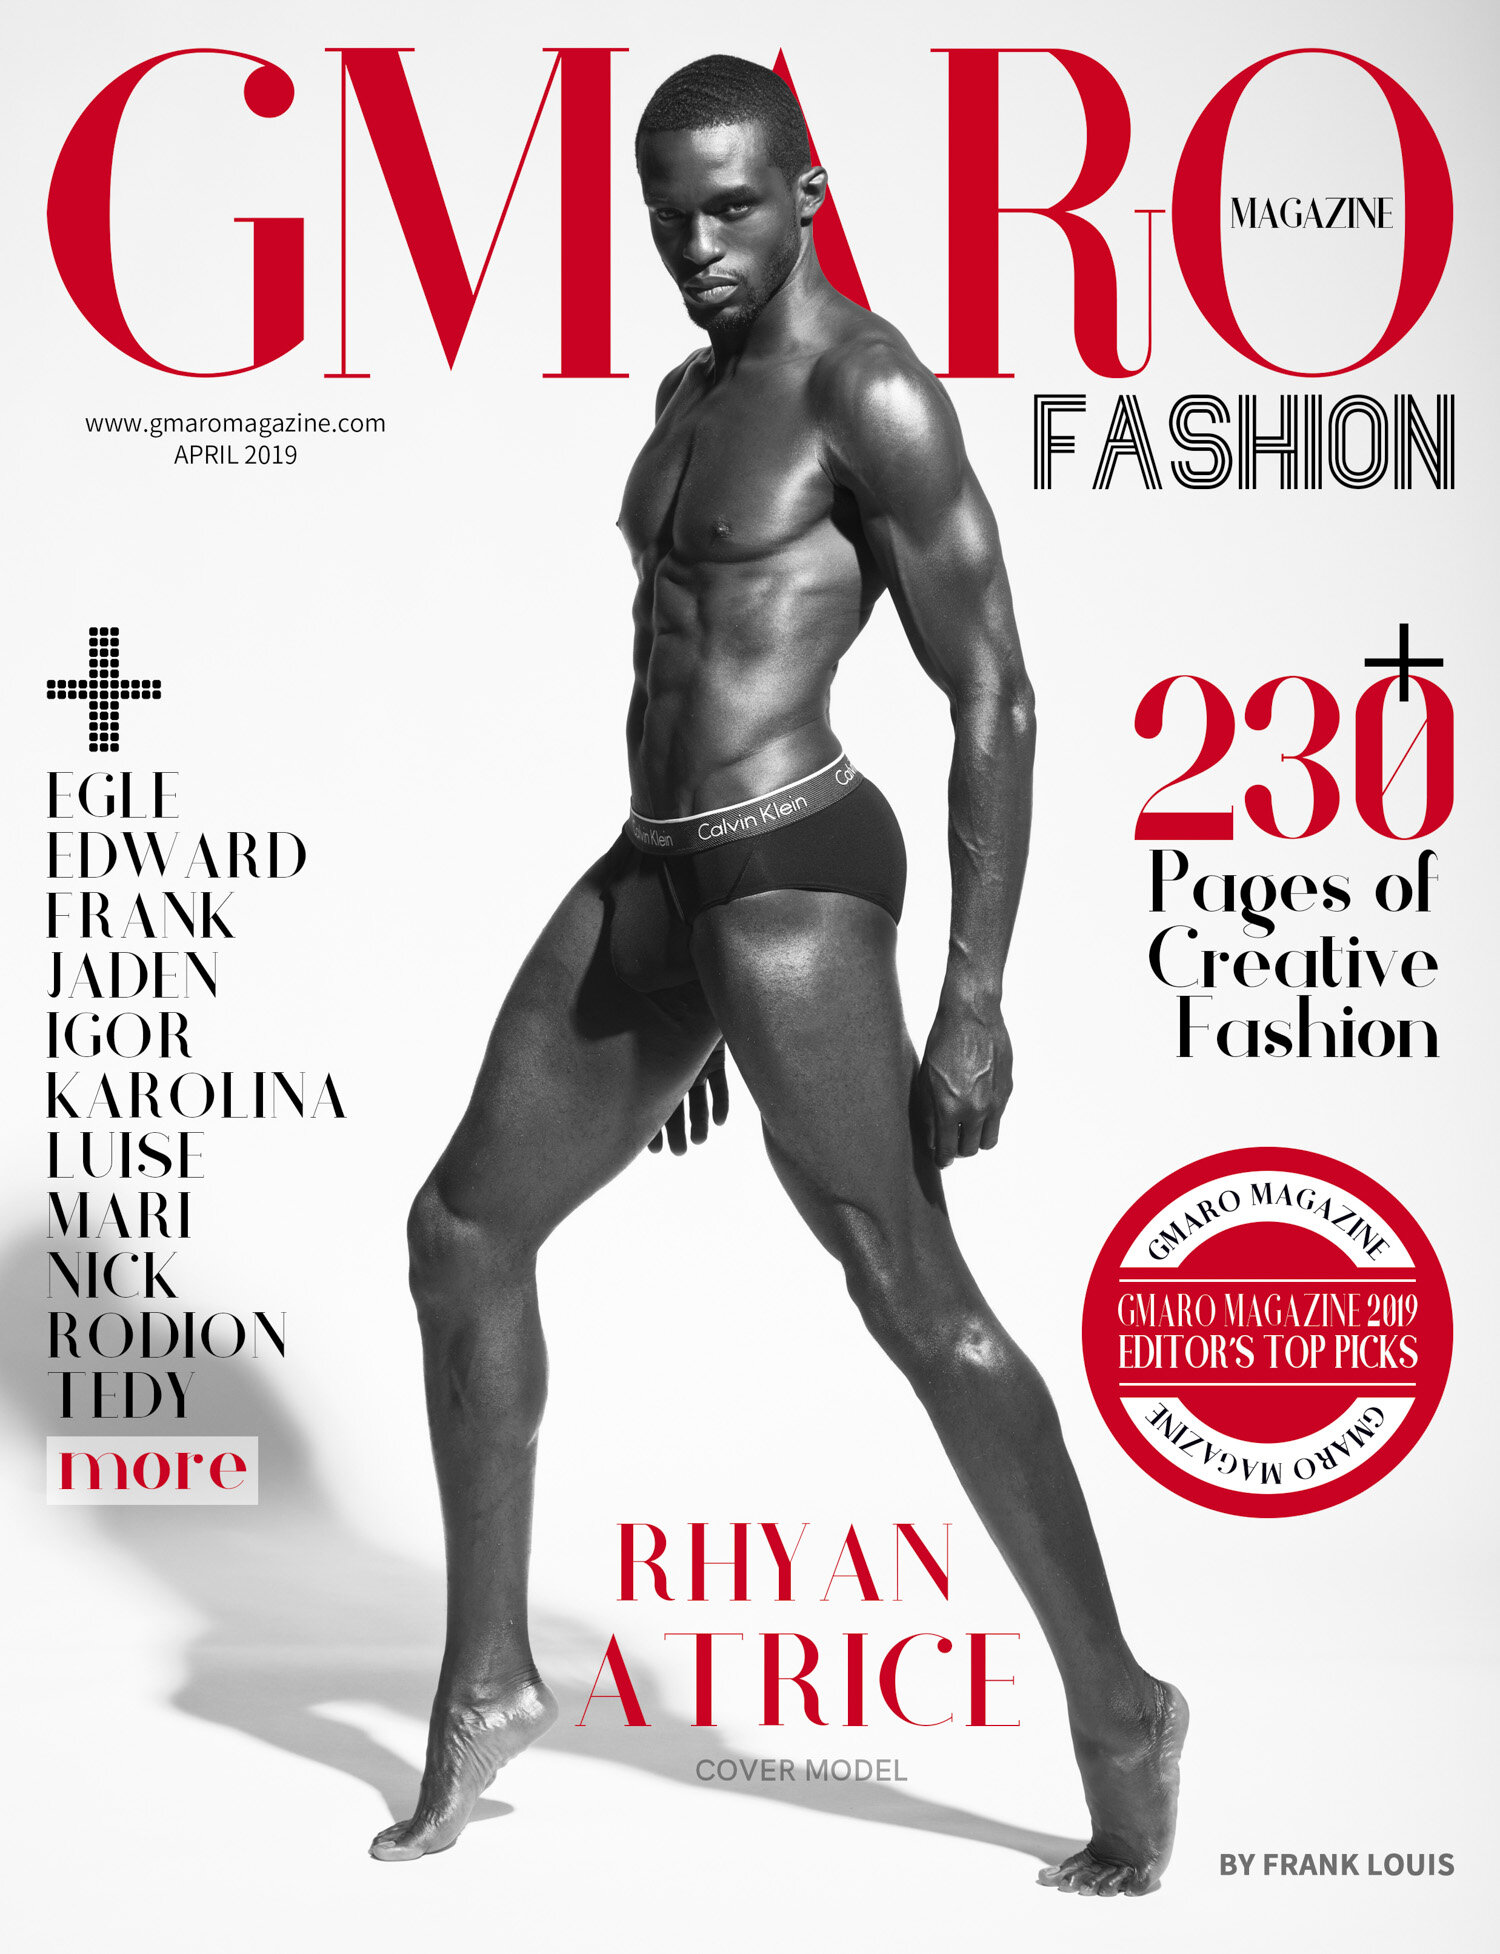 COVER-GMARO Magazine APRIL 2019 ISSUE.jpg